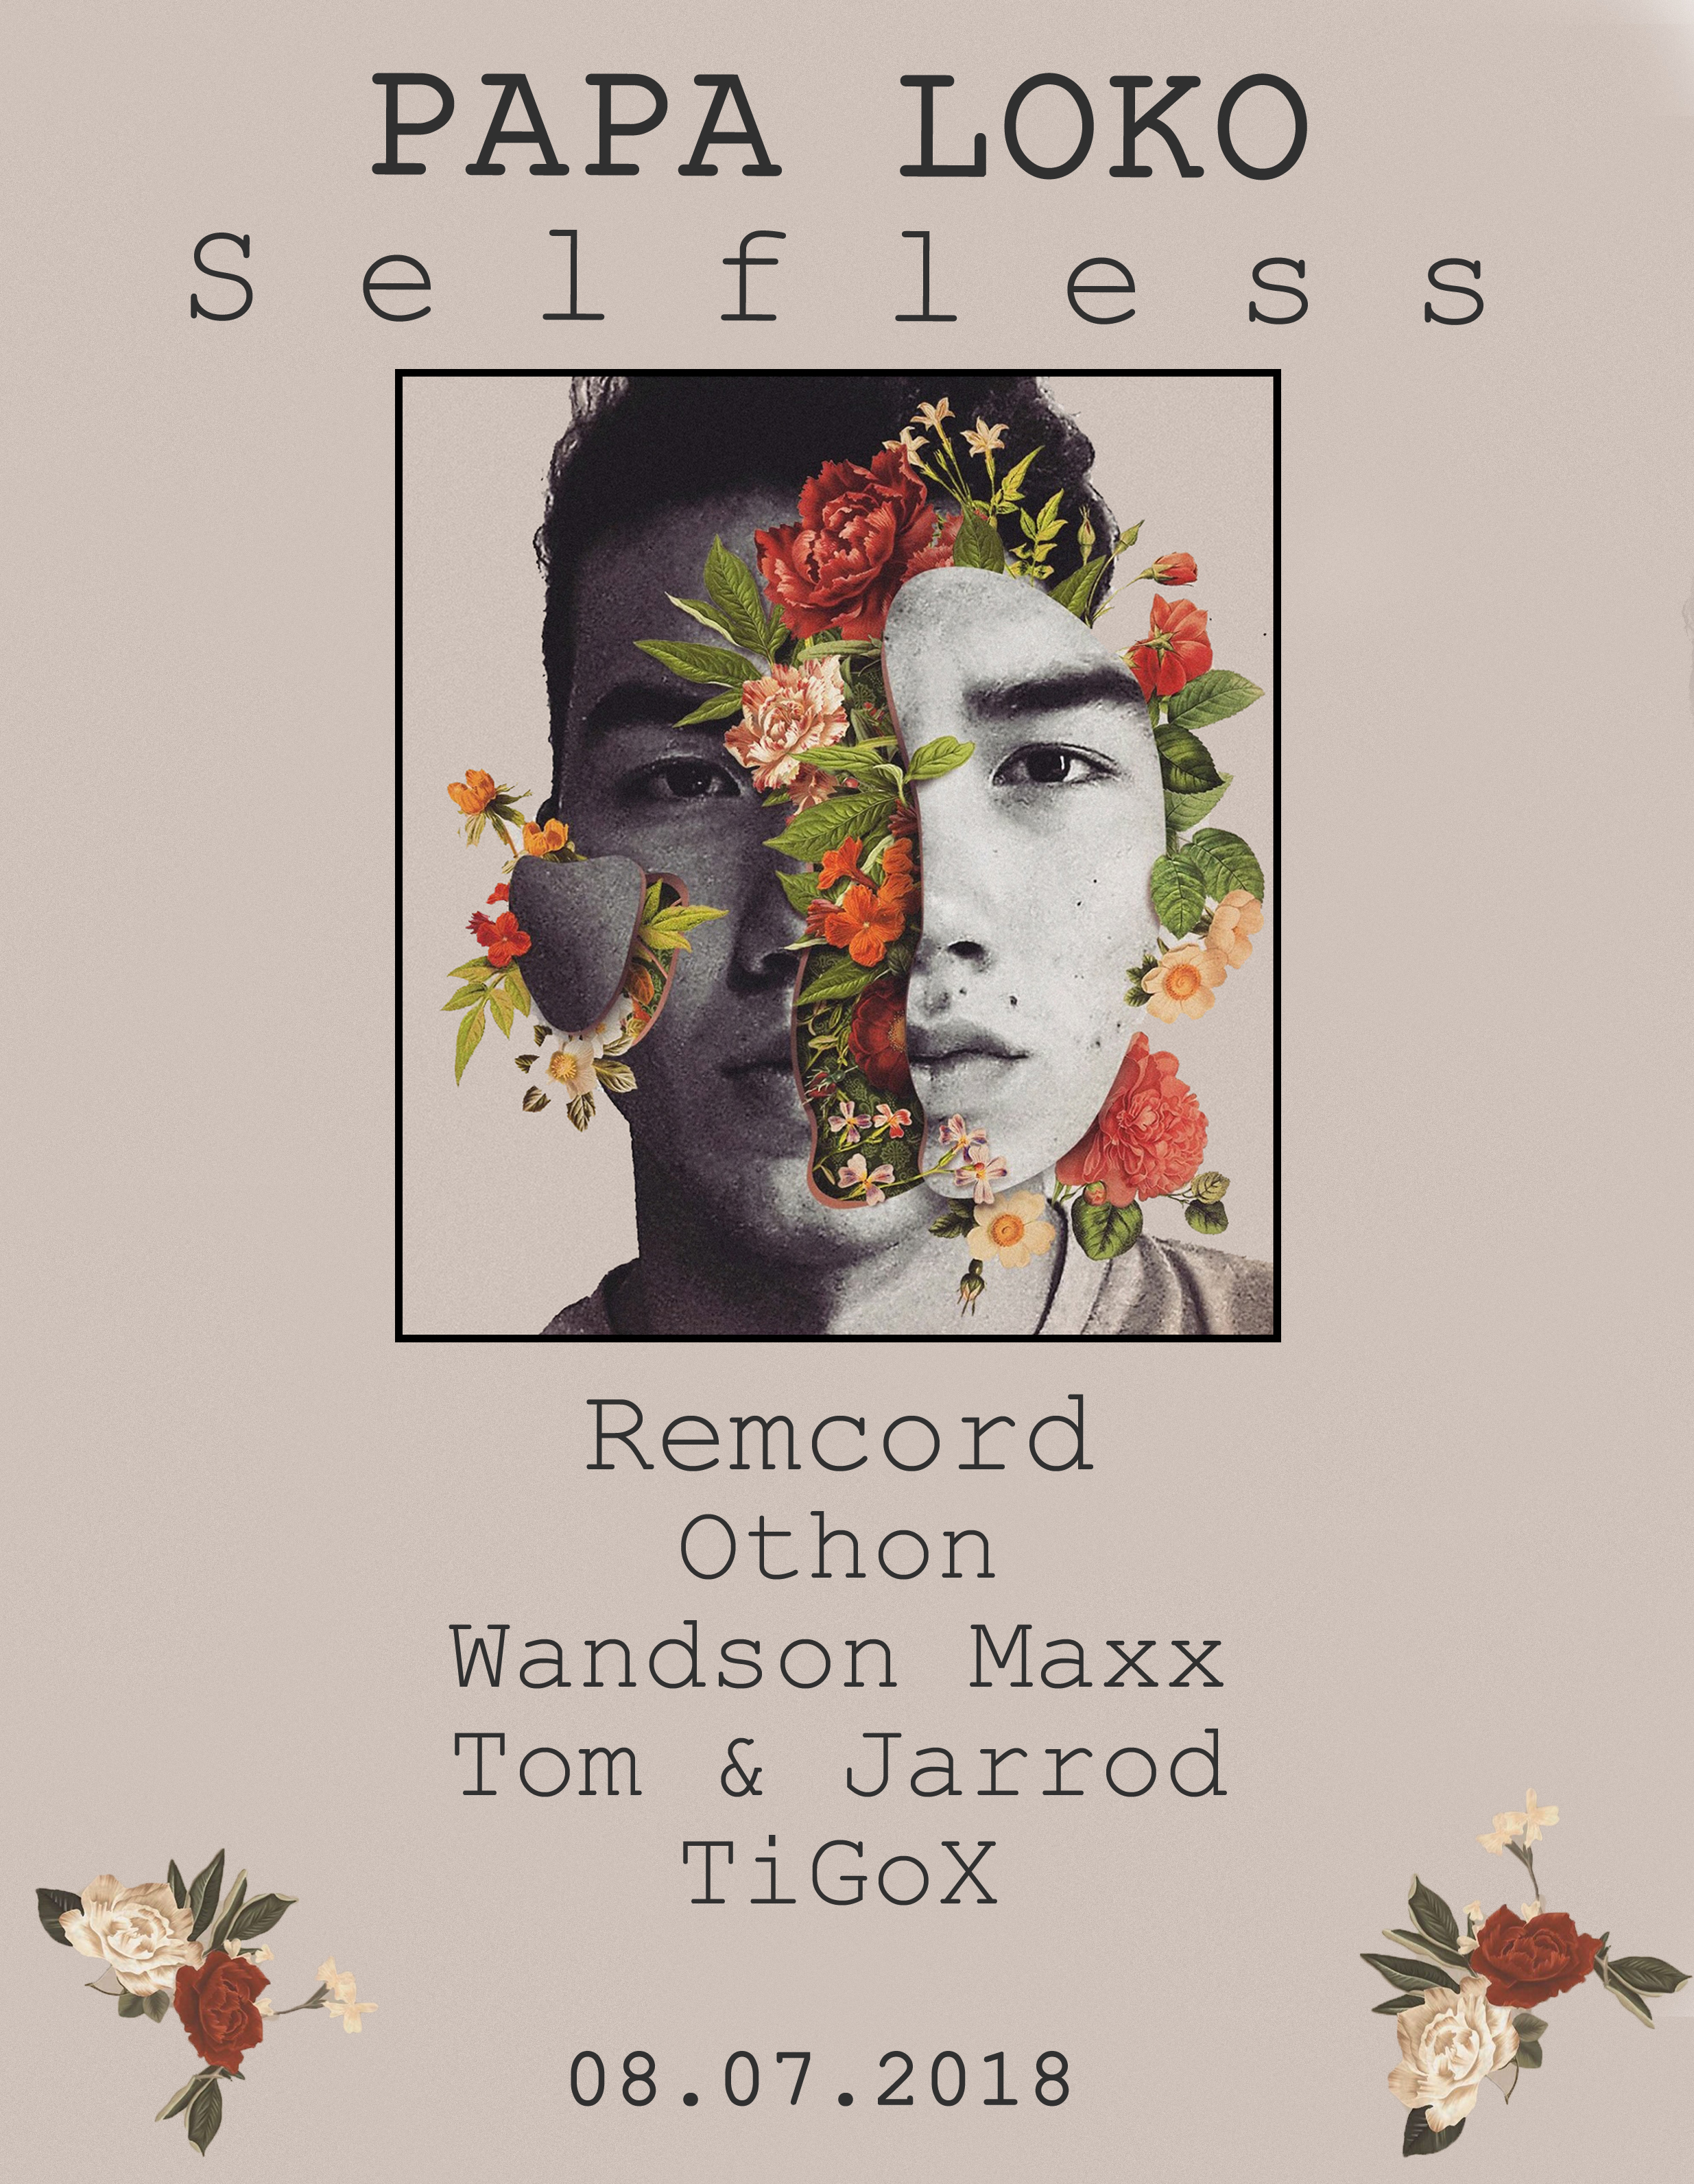 Papa Loko: Selfless with Remcord, Othon, Wandson Maxx, Tom & Jarrod, TiGoX – 8 July